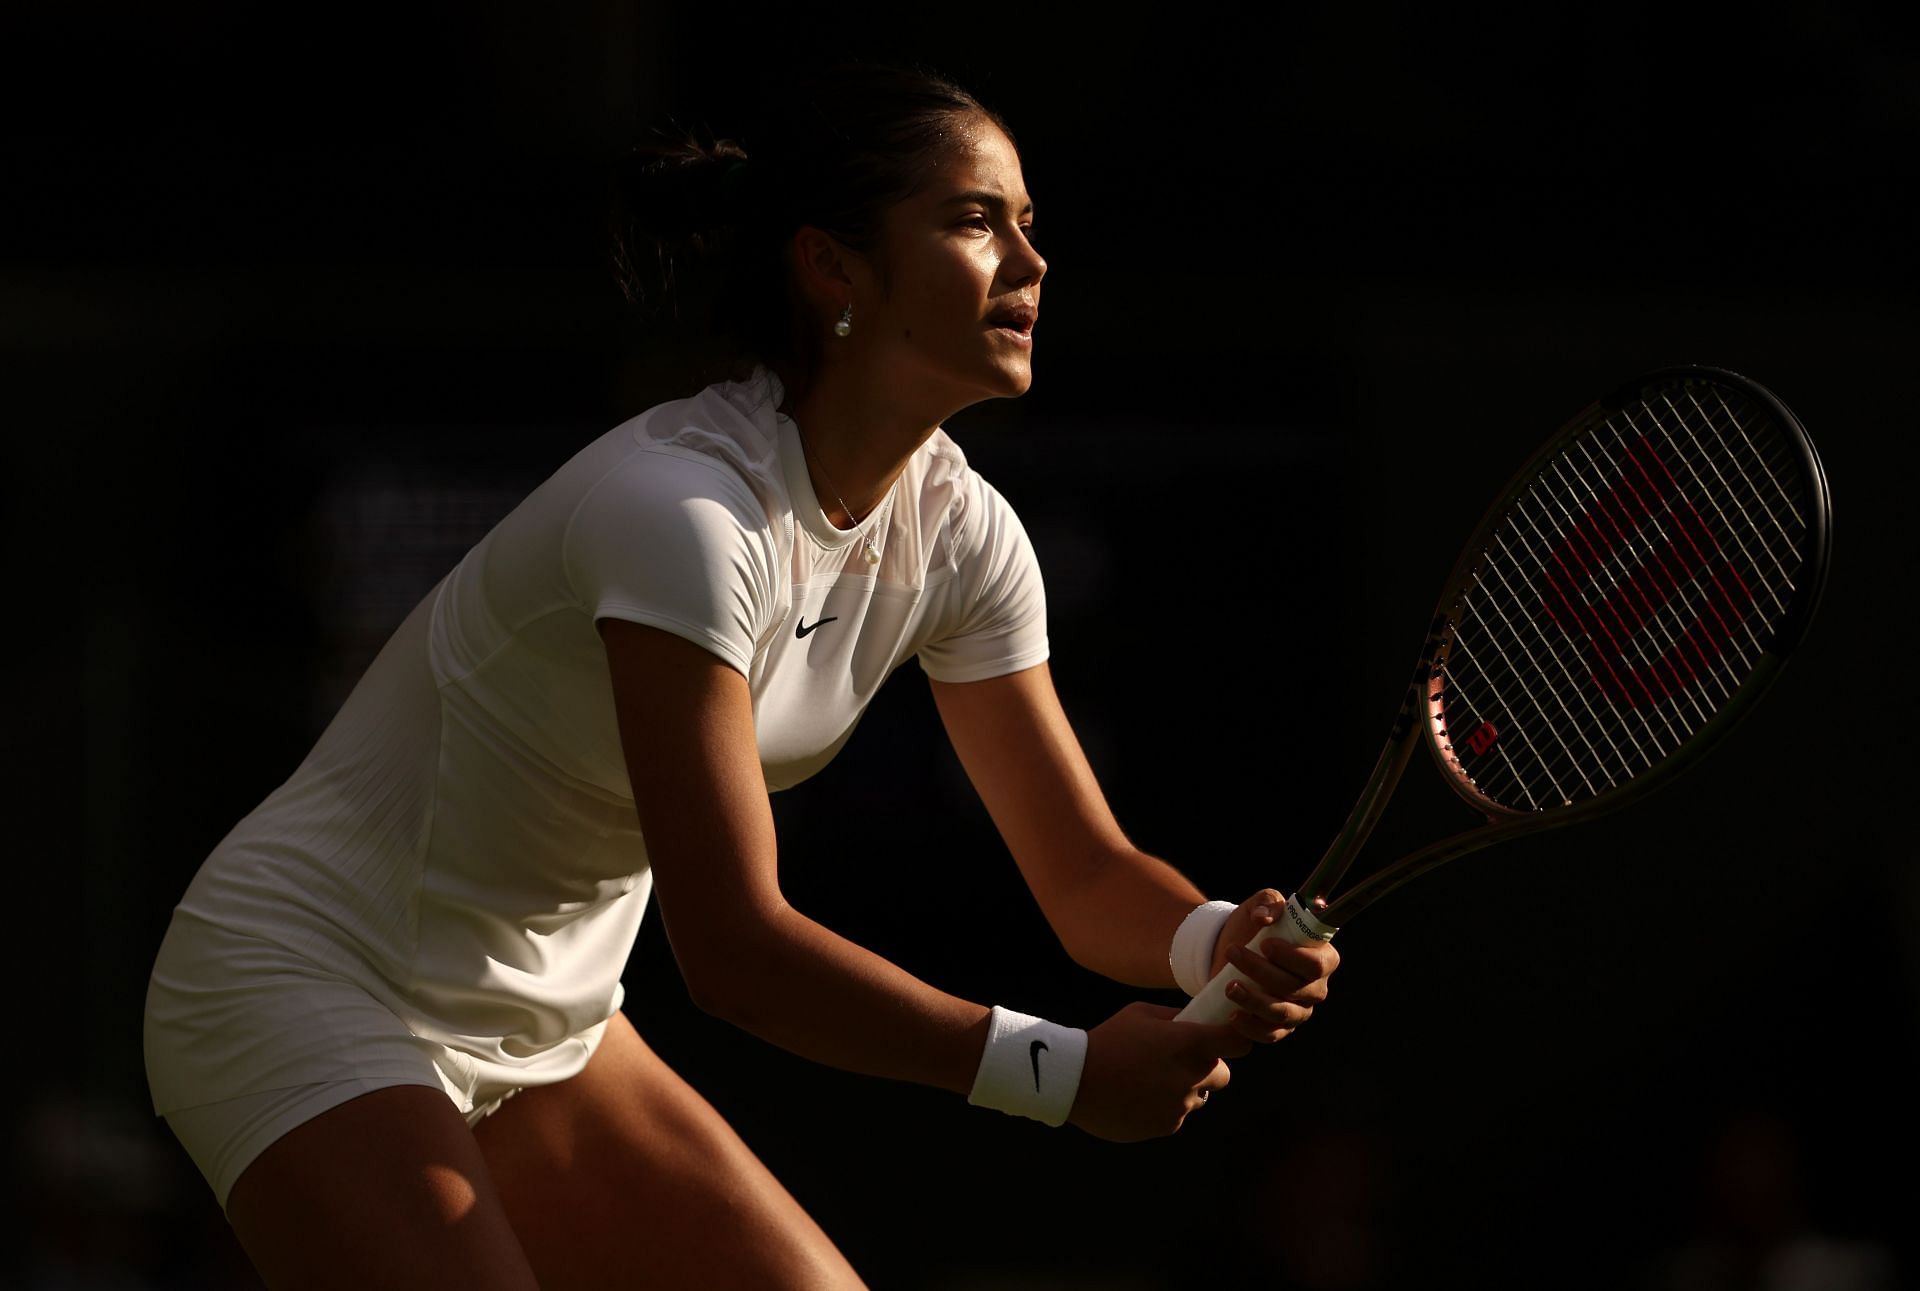 Emma Raducanu reached the fourth round of Wimbledon last year